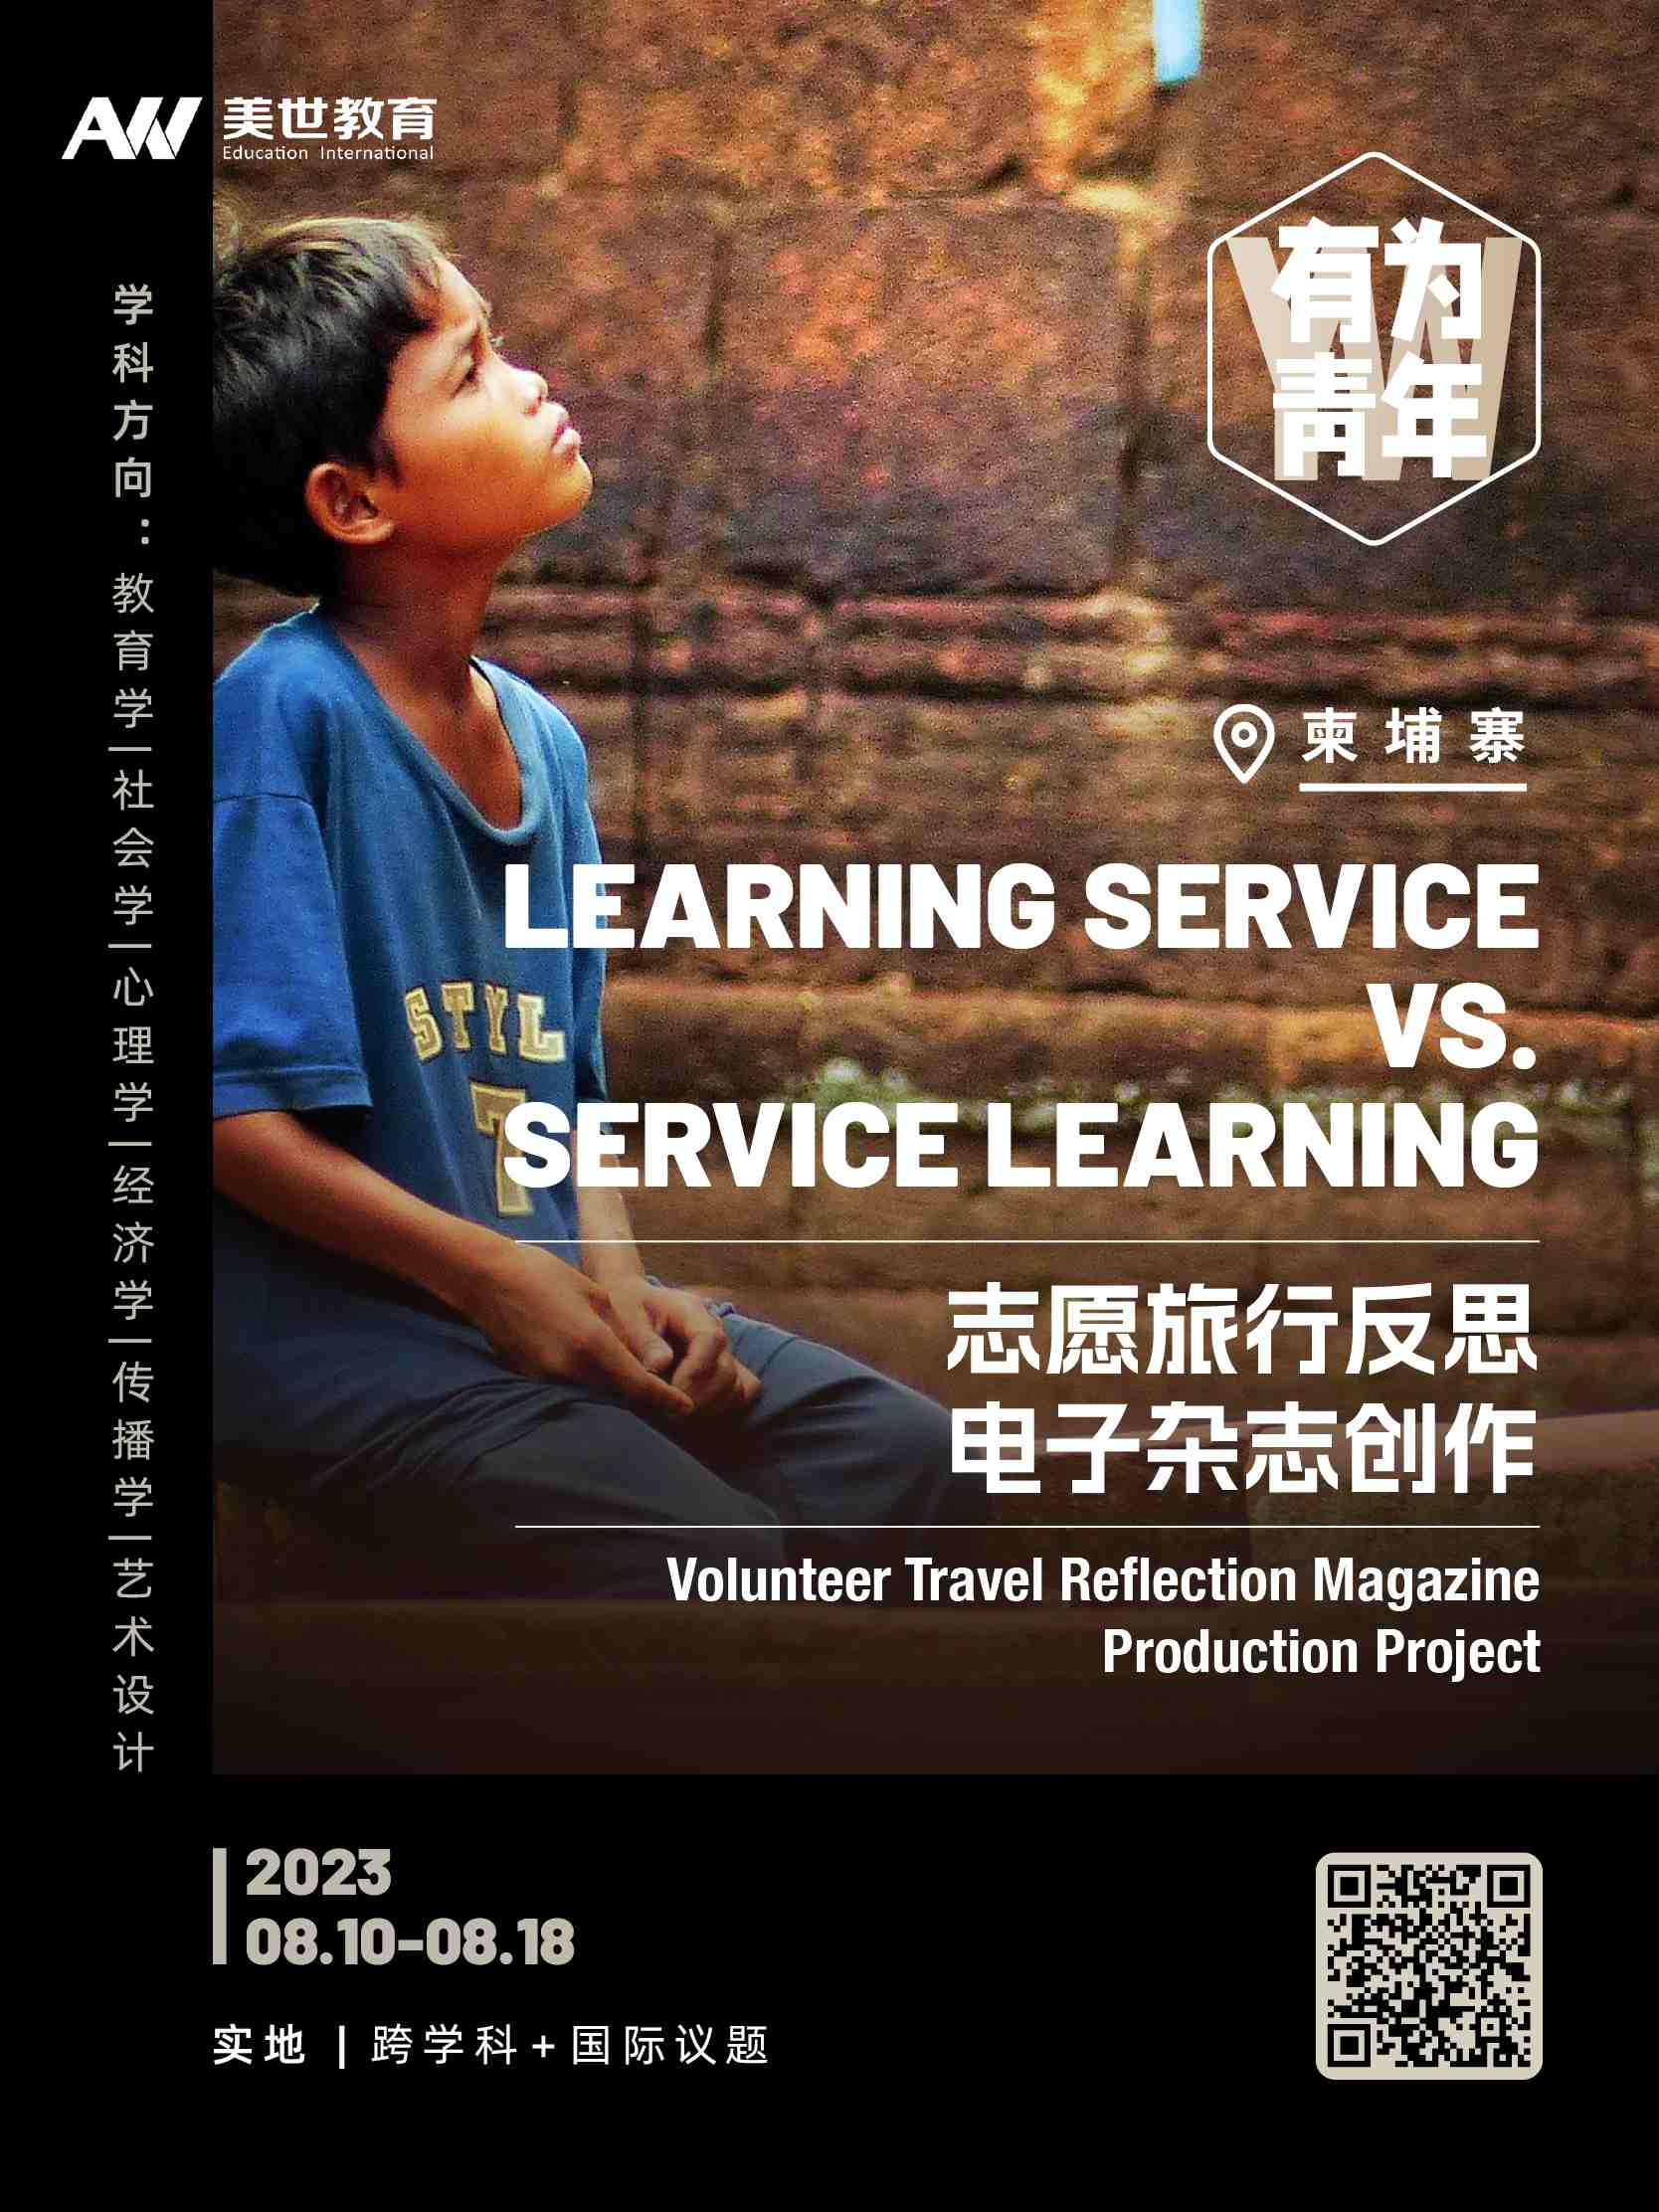 （柬埔寨）Learning Service vs. Service Learning - 志愿旅行反思电子杂志创作_副本.jpg